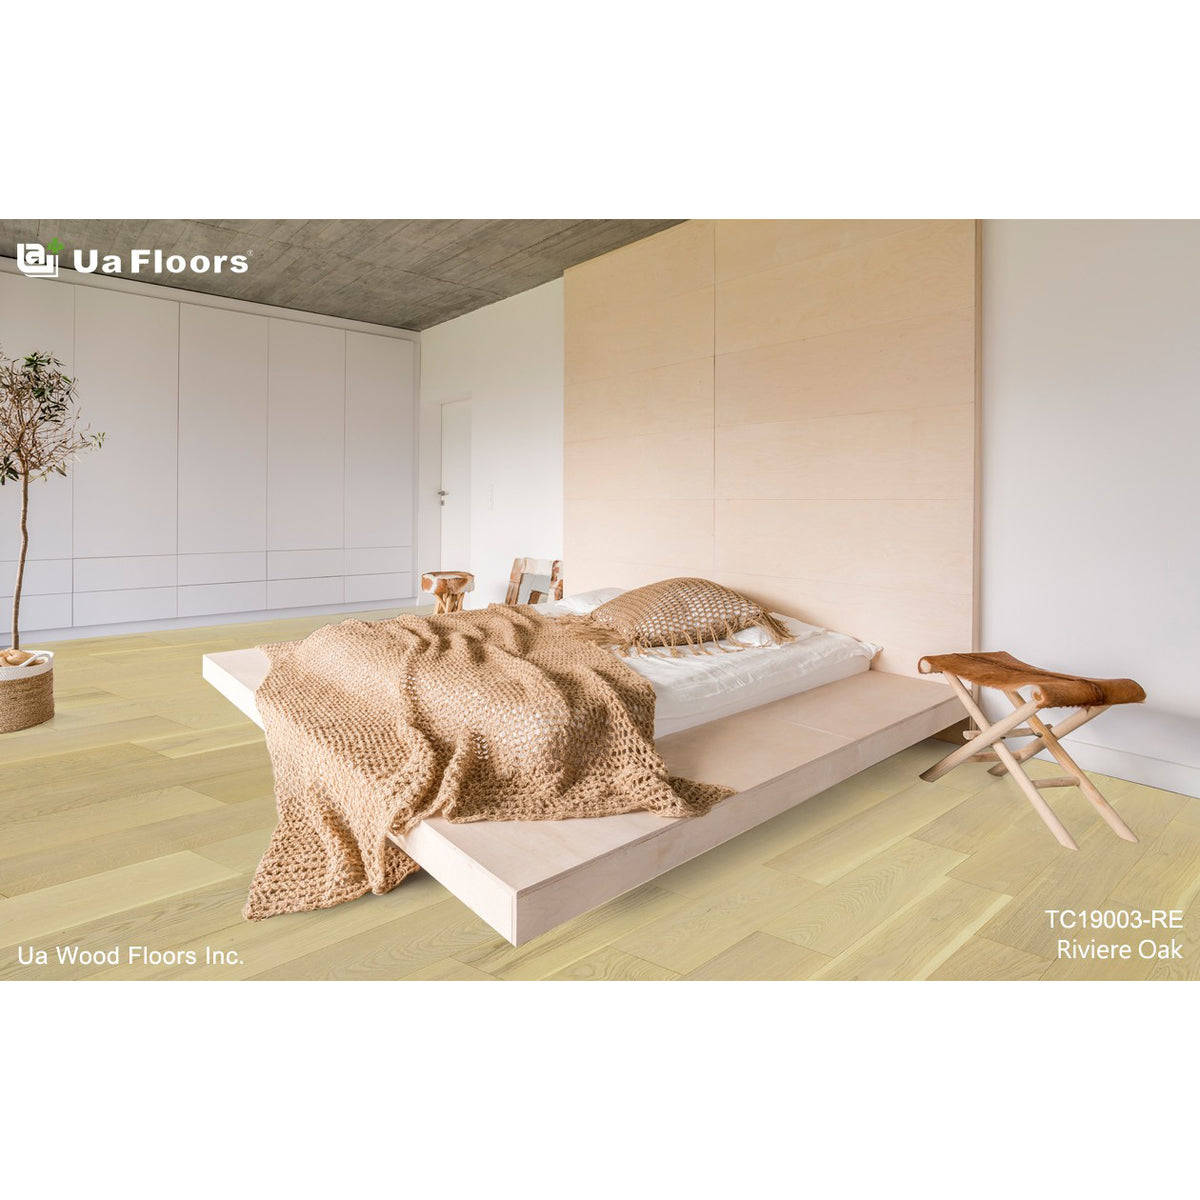 Ua Floors - Classics Collection - Riviere Euro Oak Room Scene